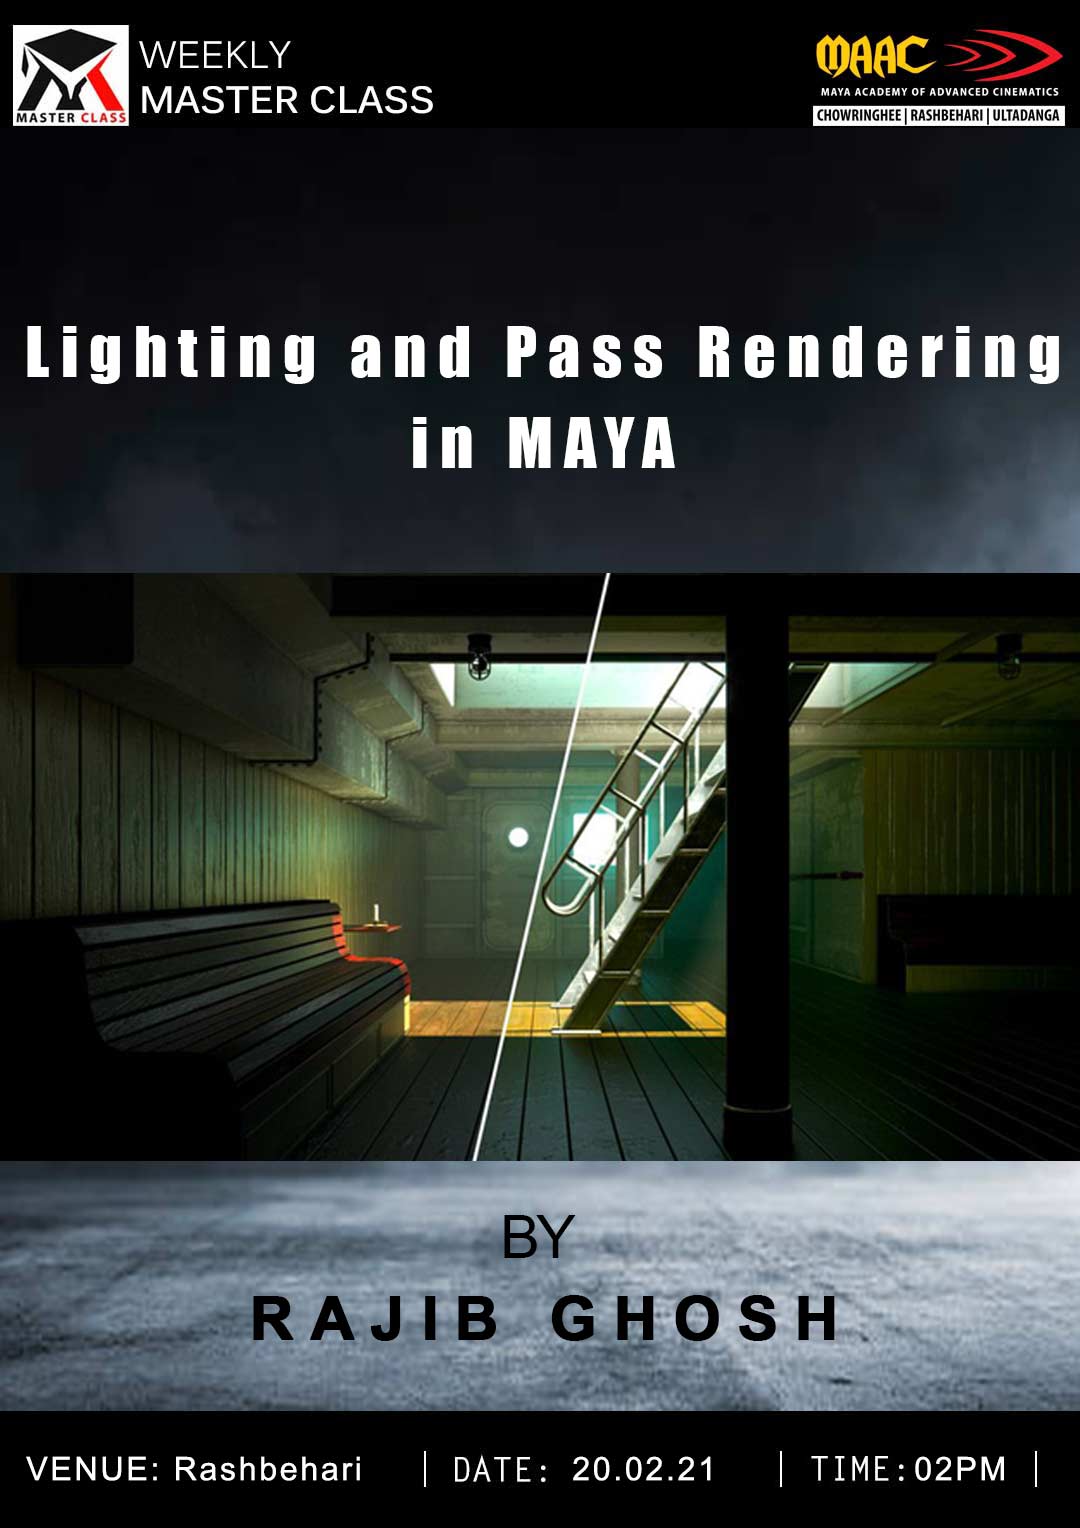 Weekly Master Class on Lighting & Pass Rendering in Maya